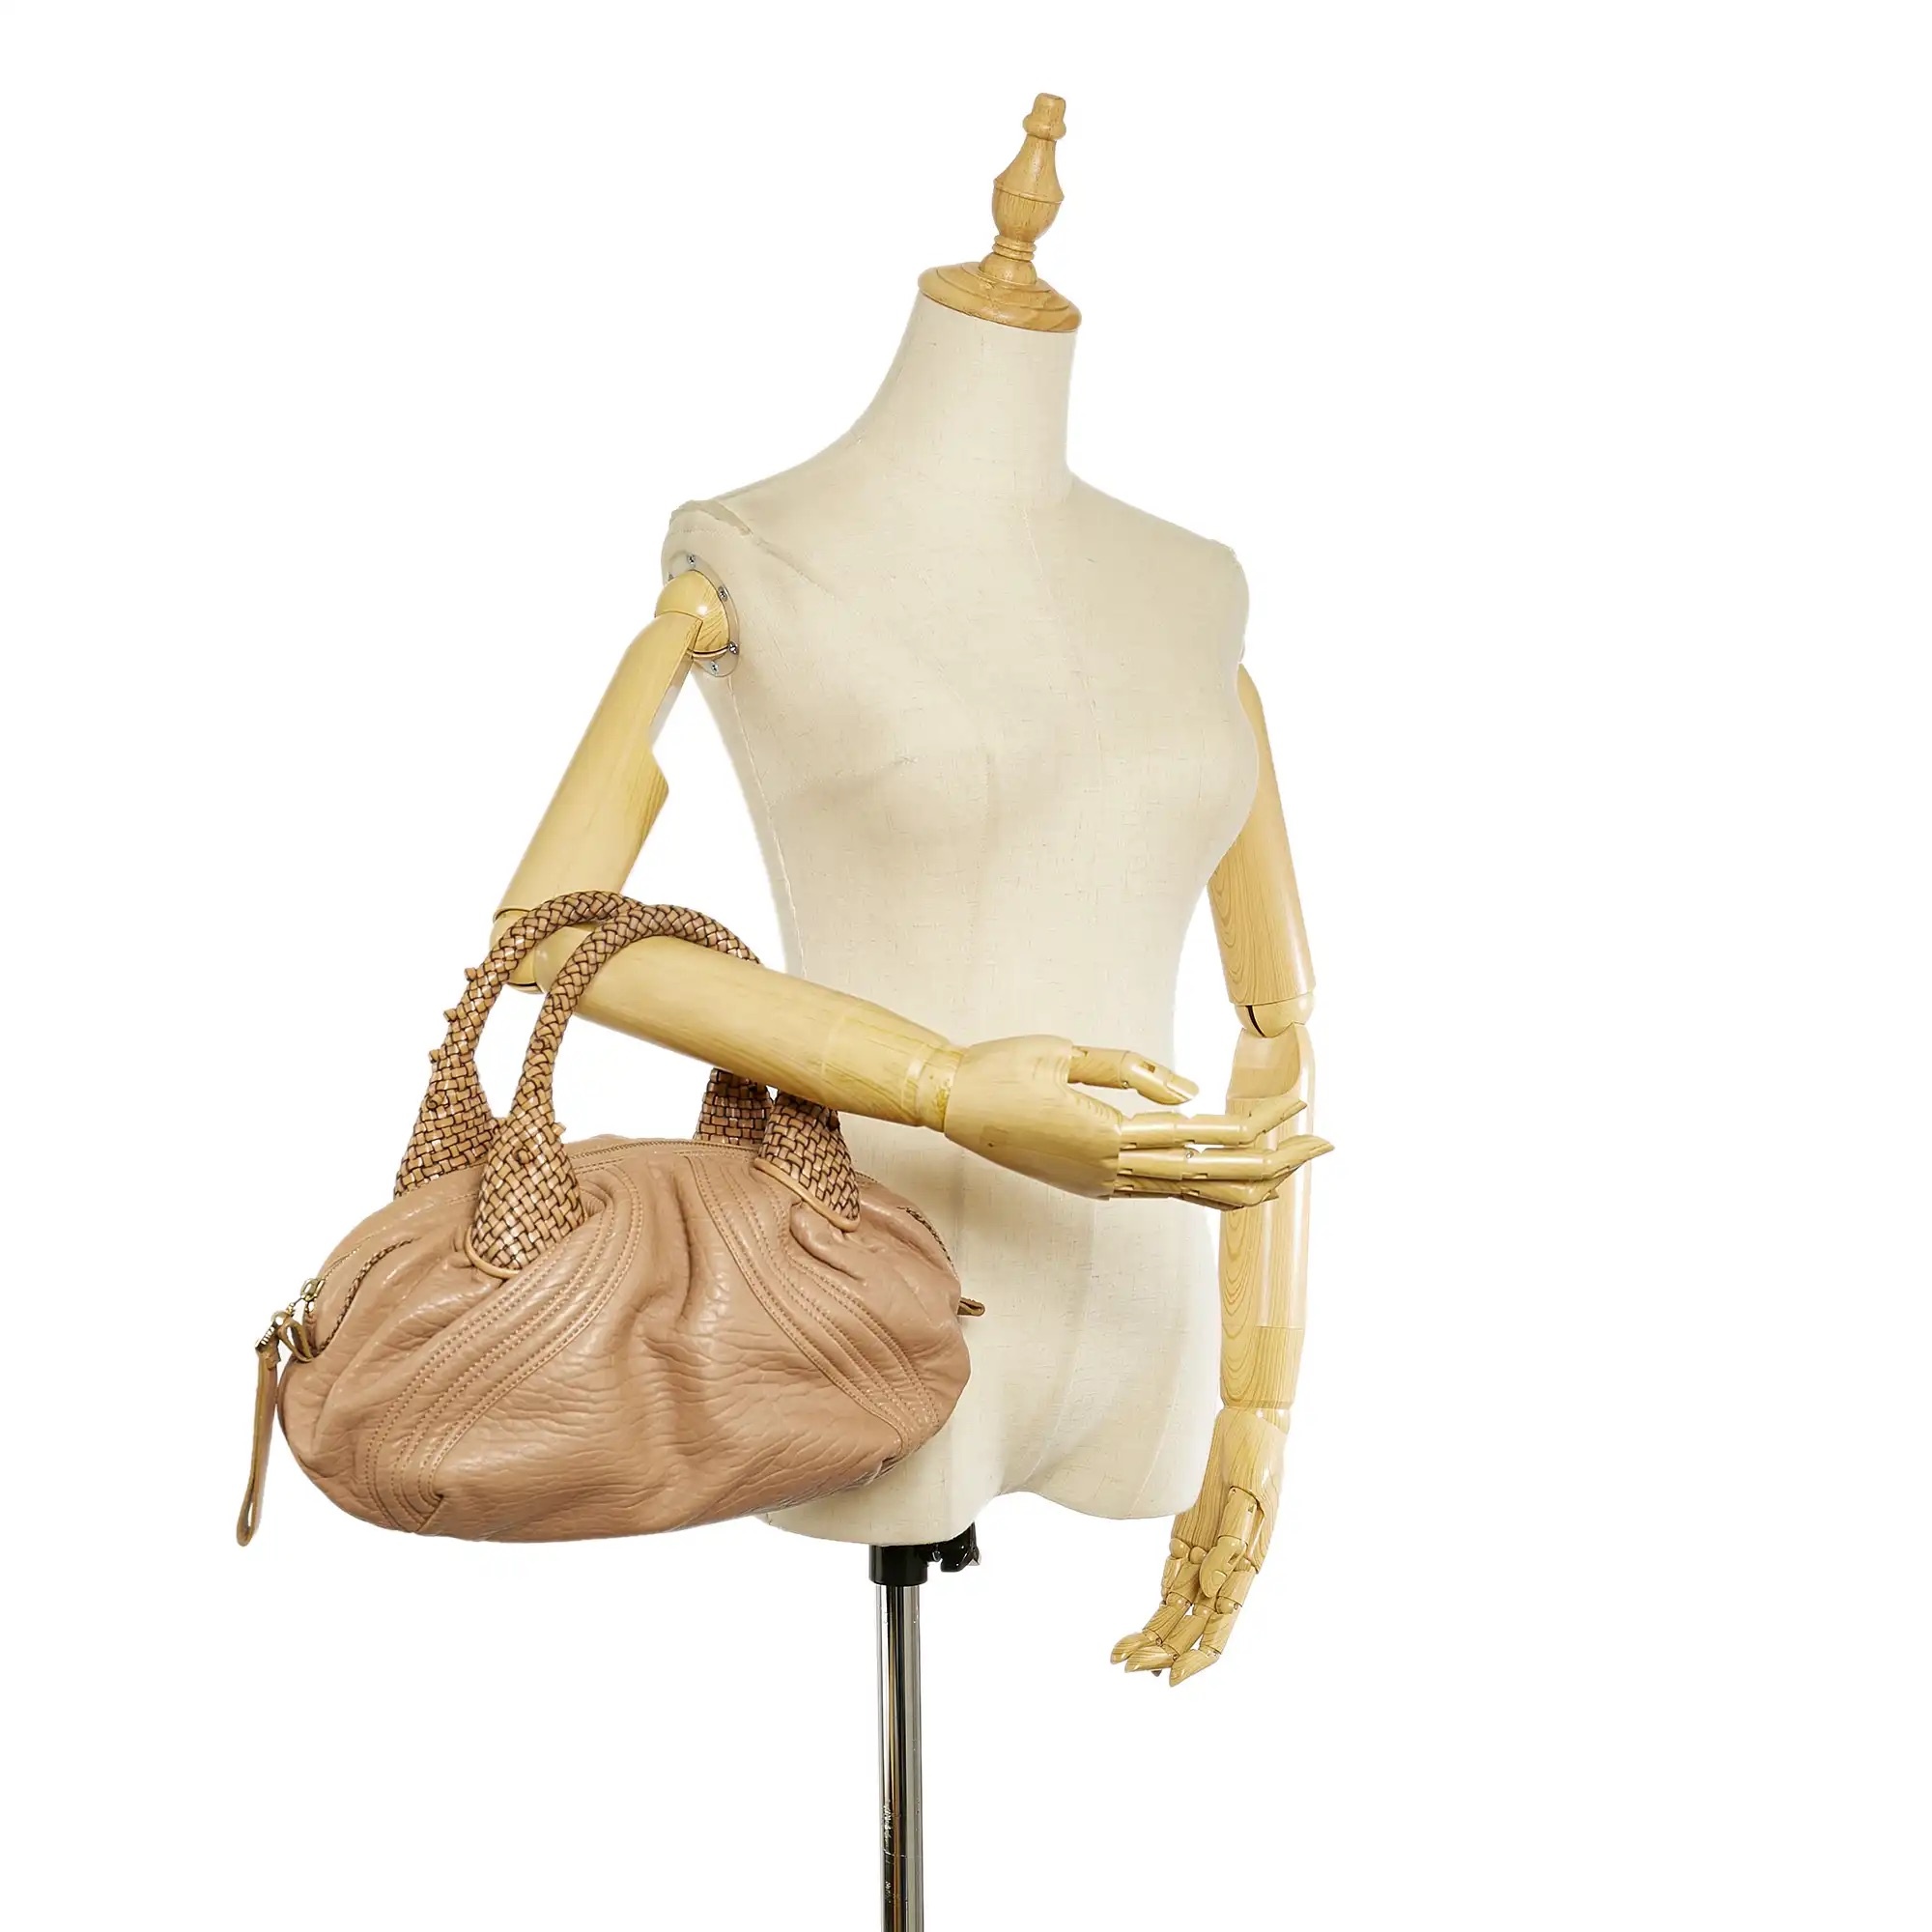 Spy leather handbag Fendi Camel in Leather - 18448677